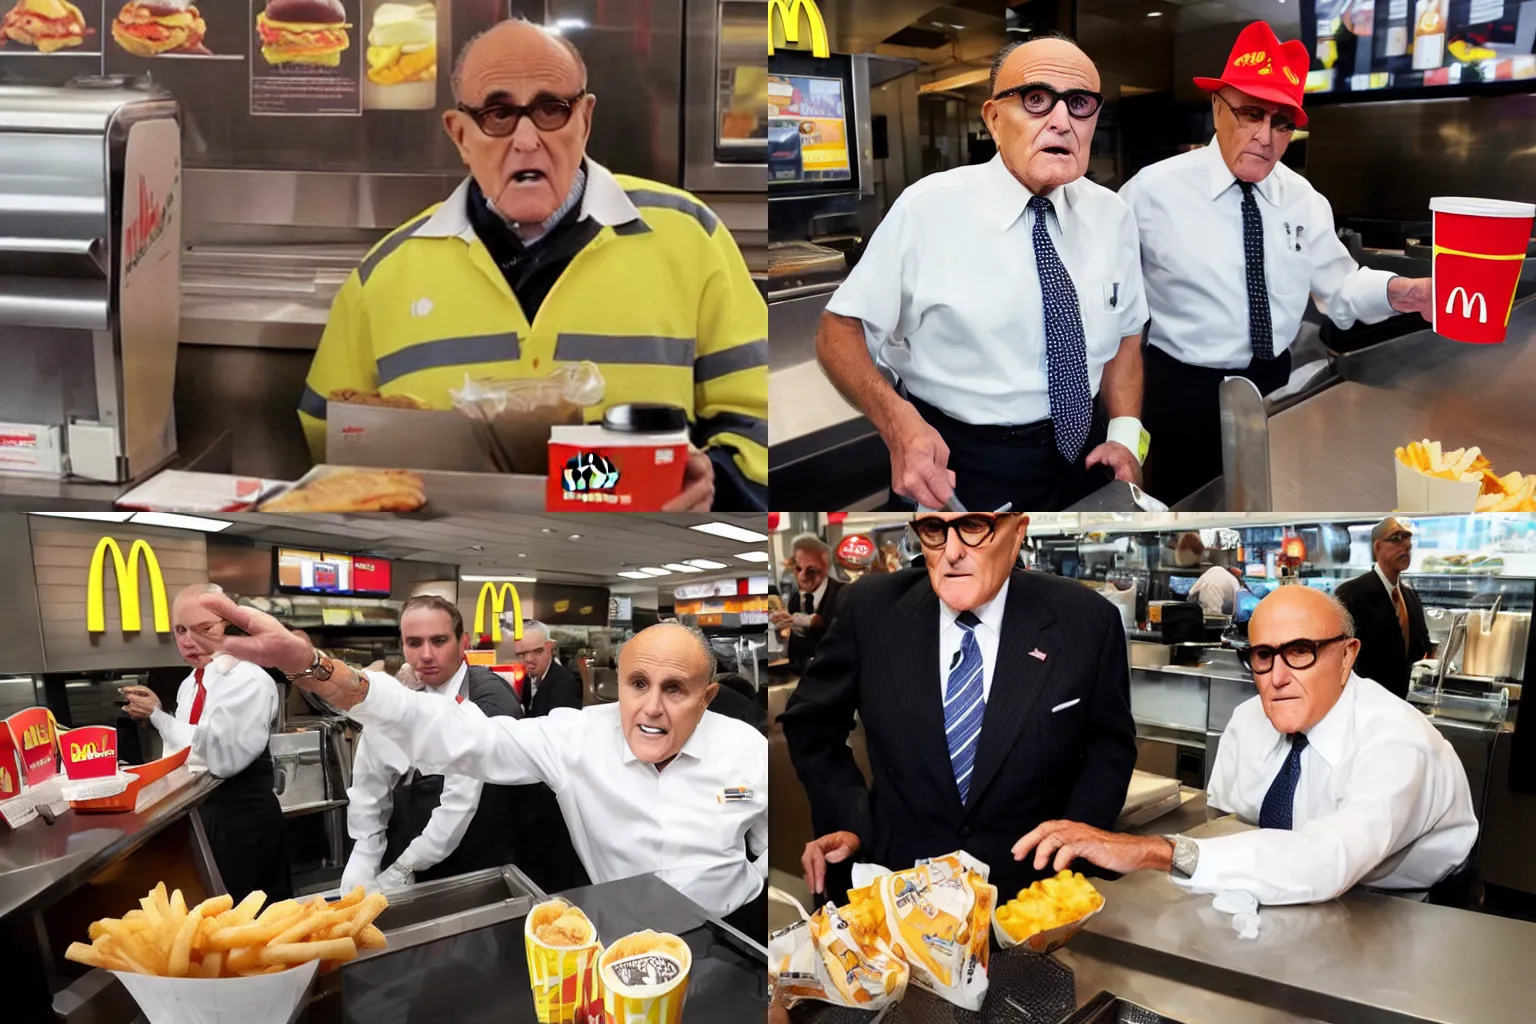 Prompt: Rudy Giuliani working at McDonalds